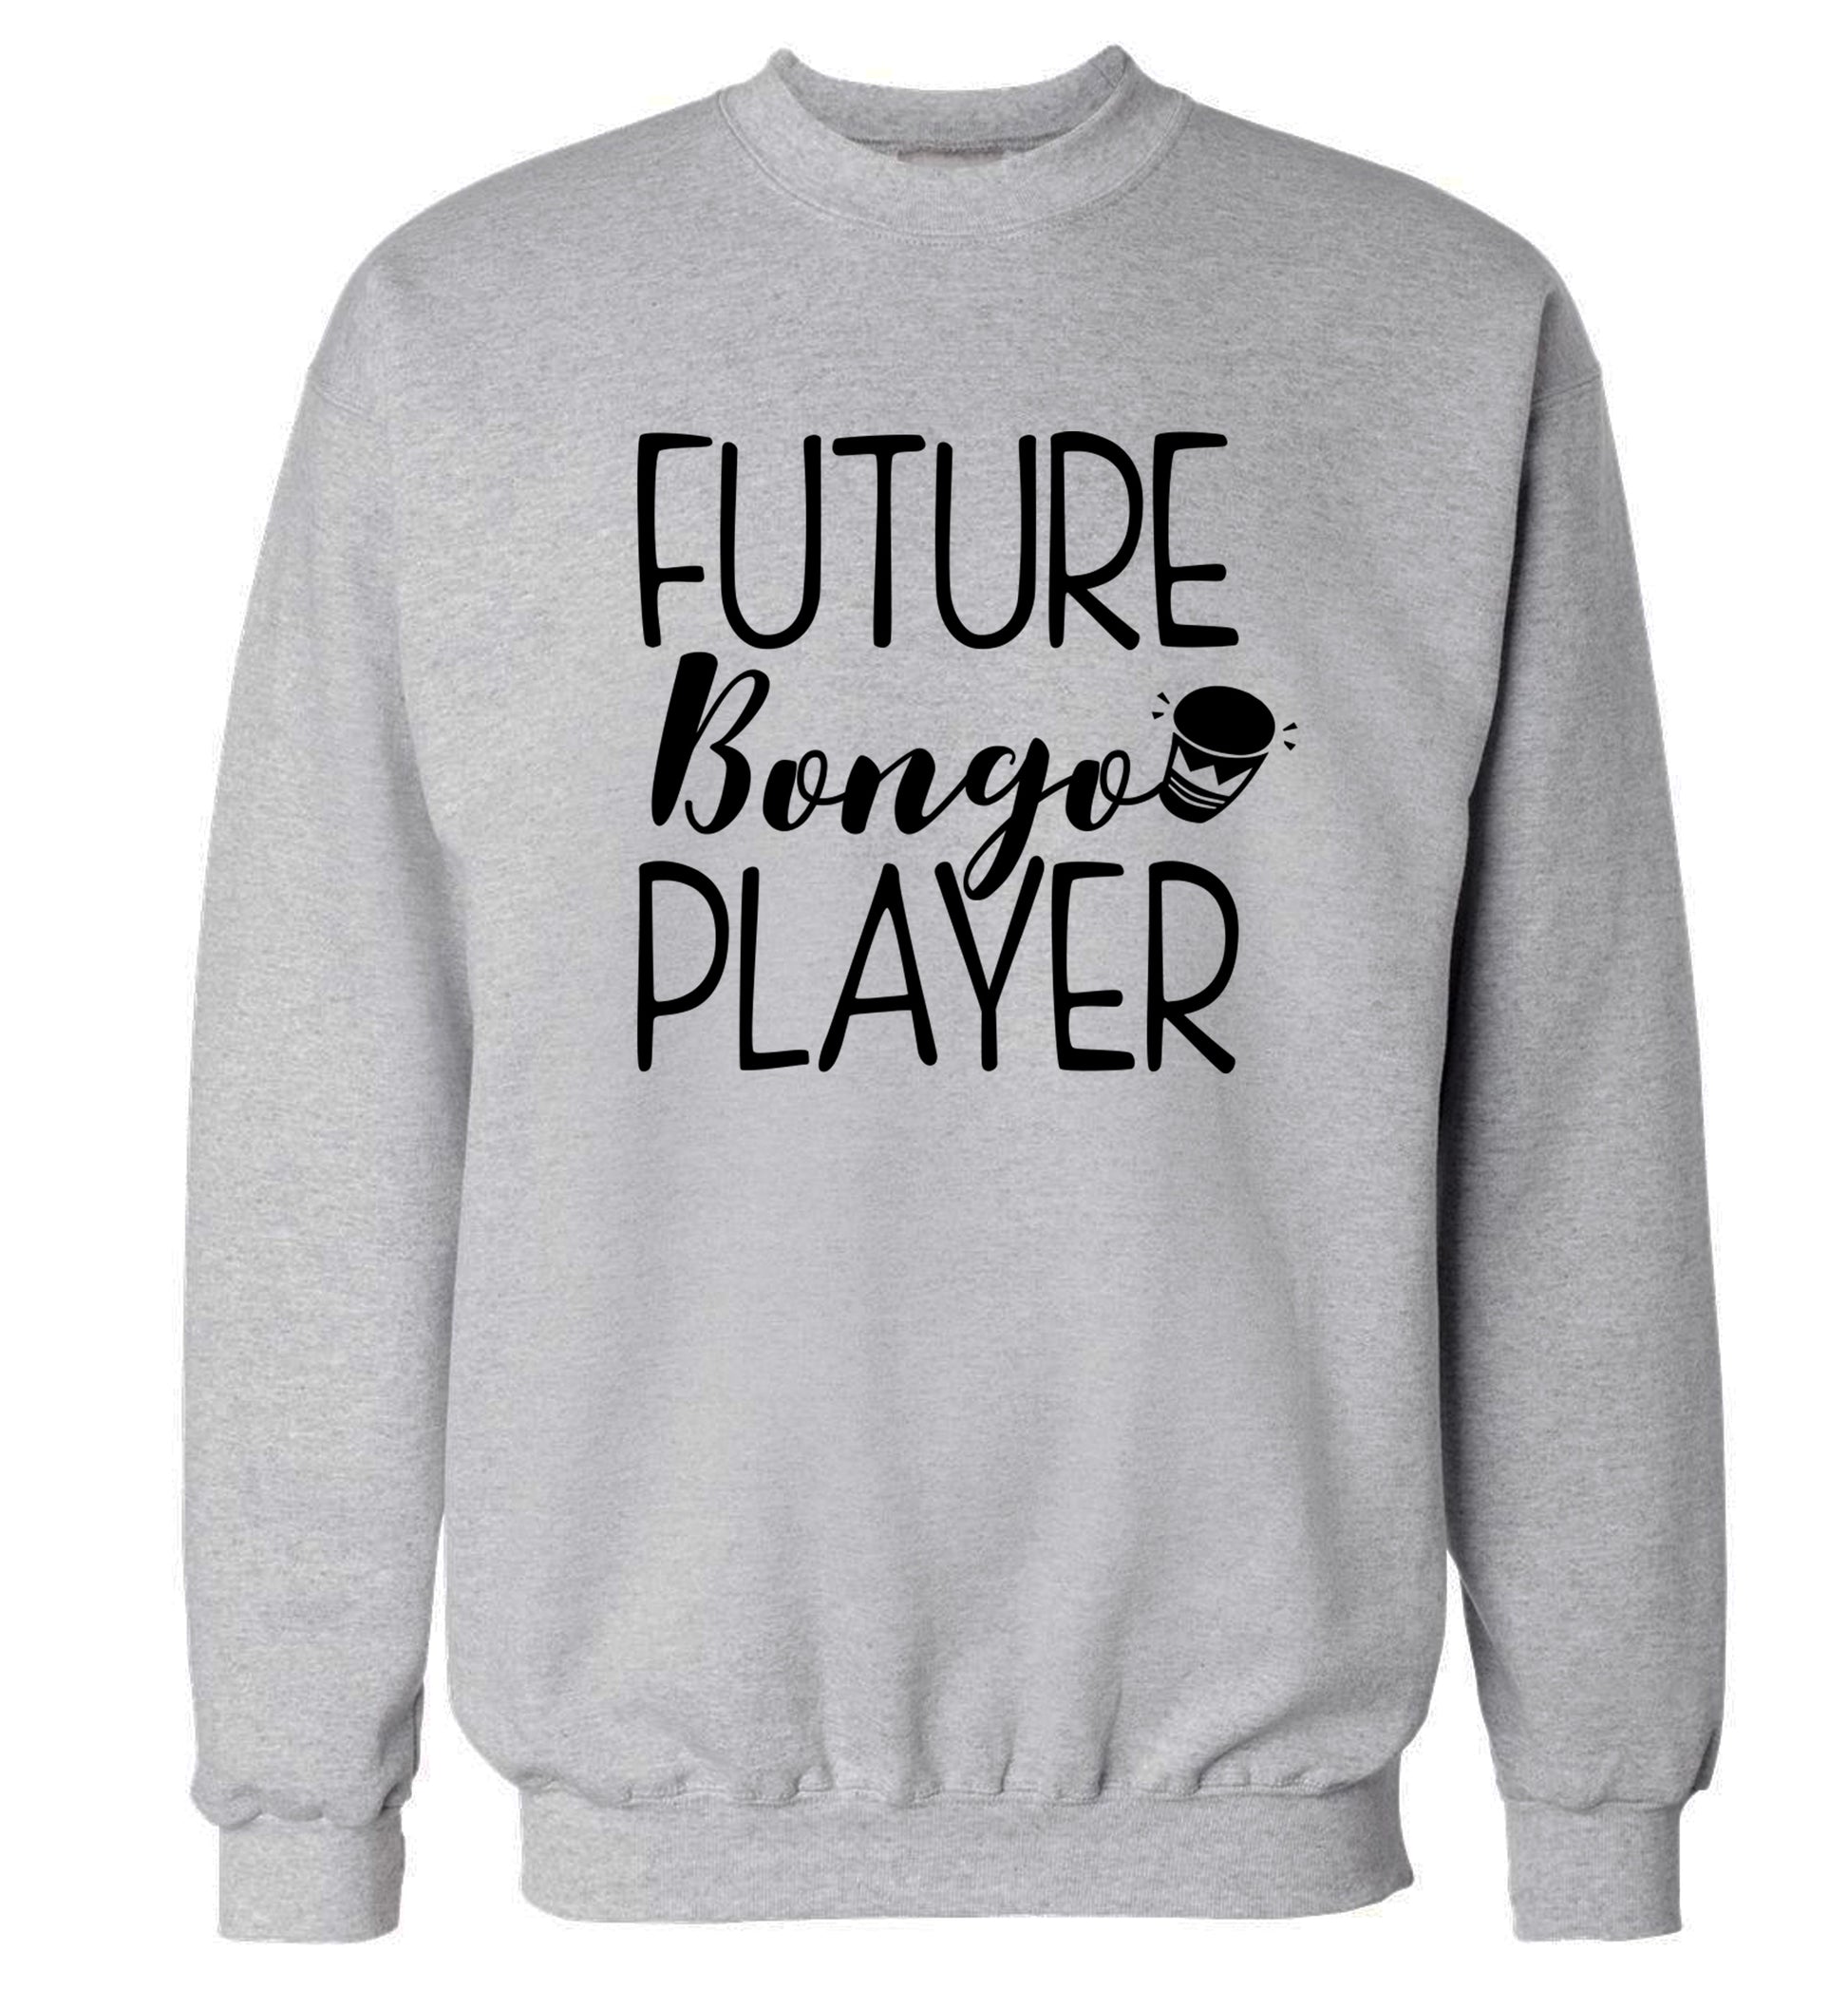 Future bongo player Adult's unisex grey Sweater 2XL